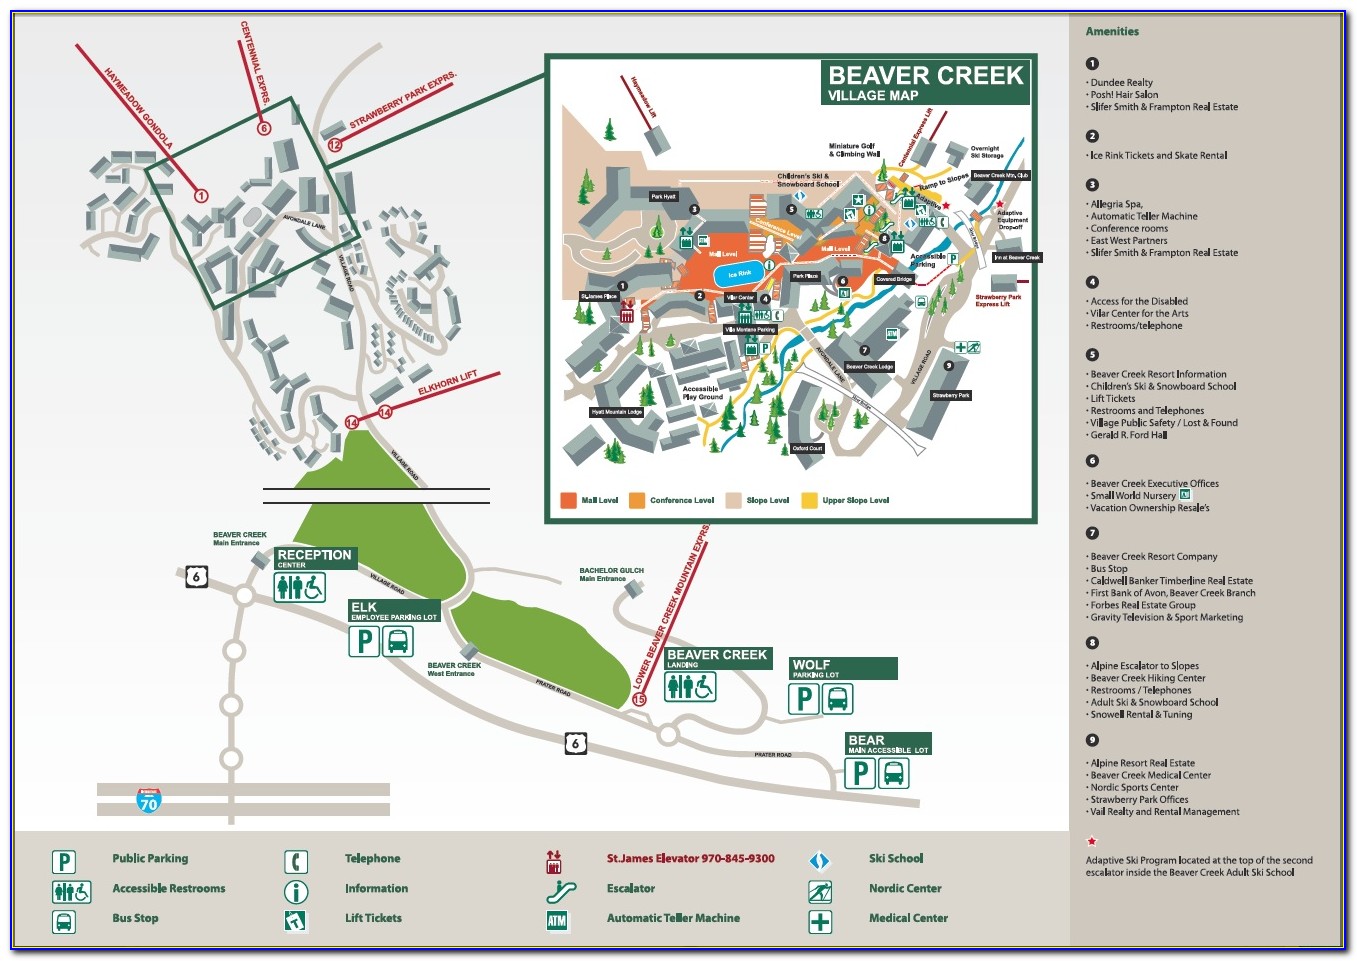 Beaver Creek Hotel Map